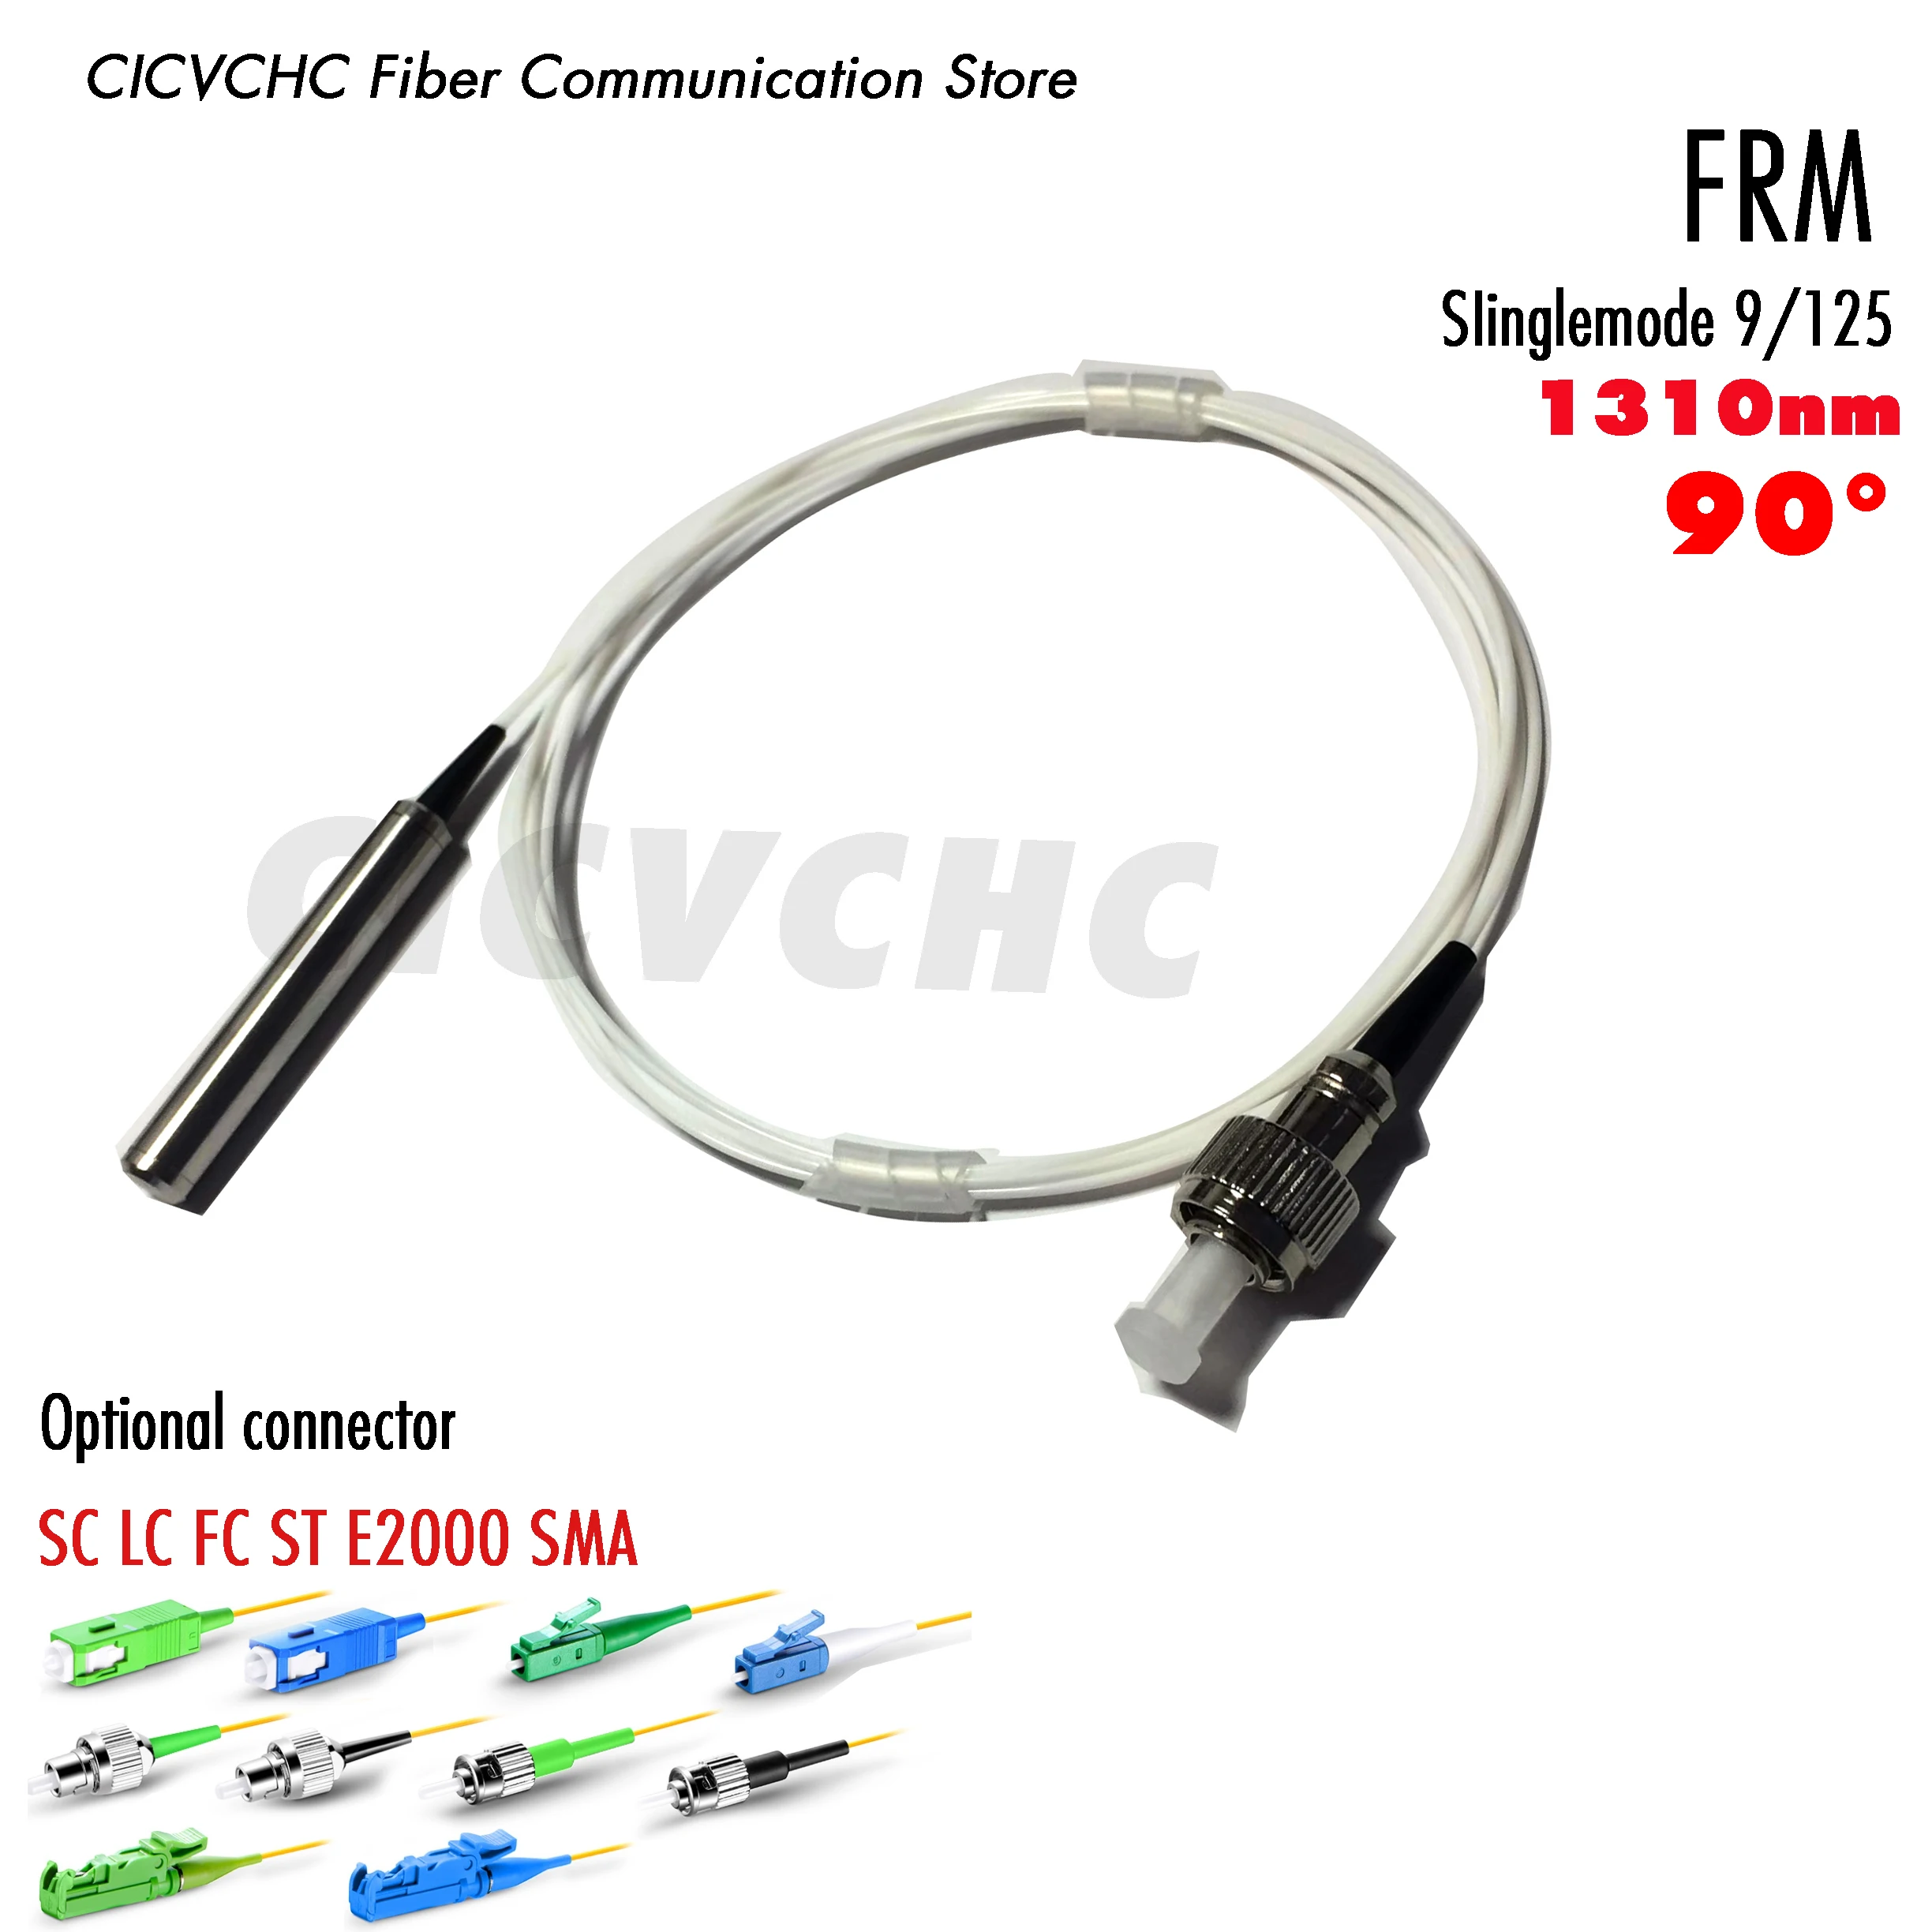 Broadband Faraday Rotator Mirrors FRM 1310 nm, 90° SM with SC, LC, FC, ST, E2000, 1m 0.9mm tube